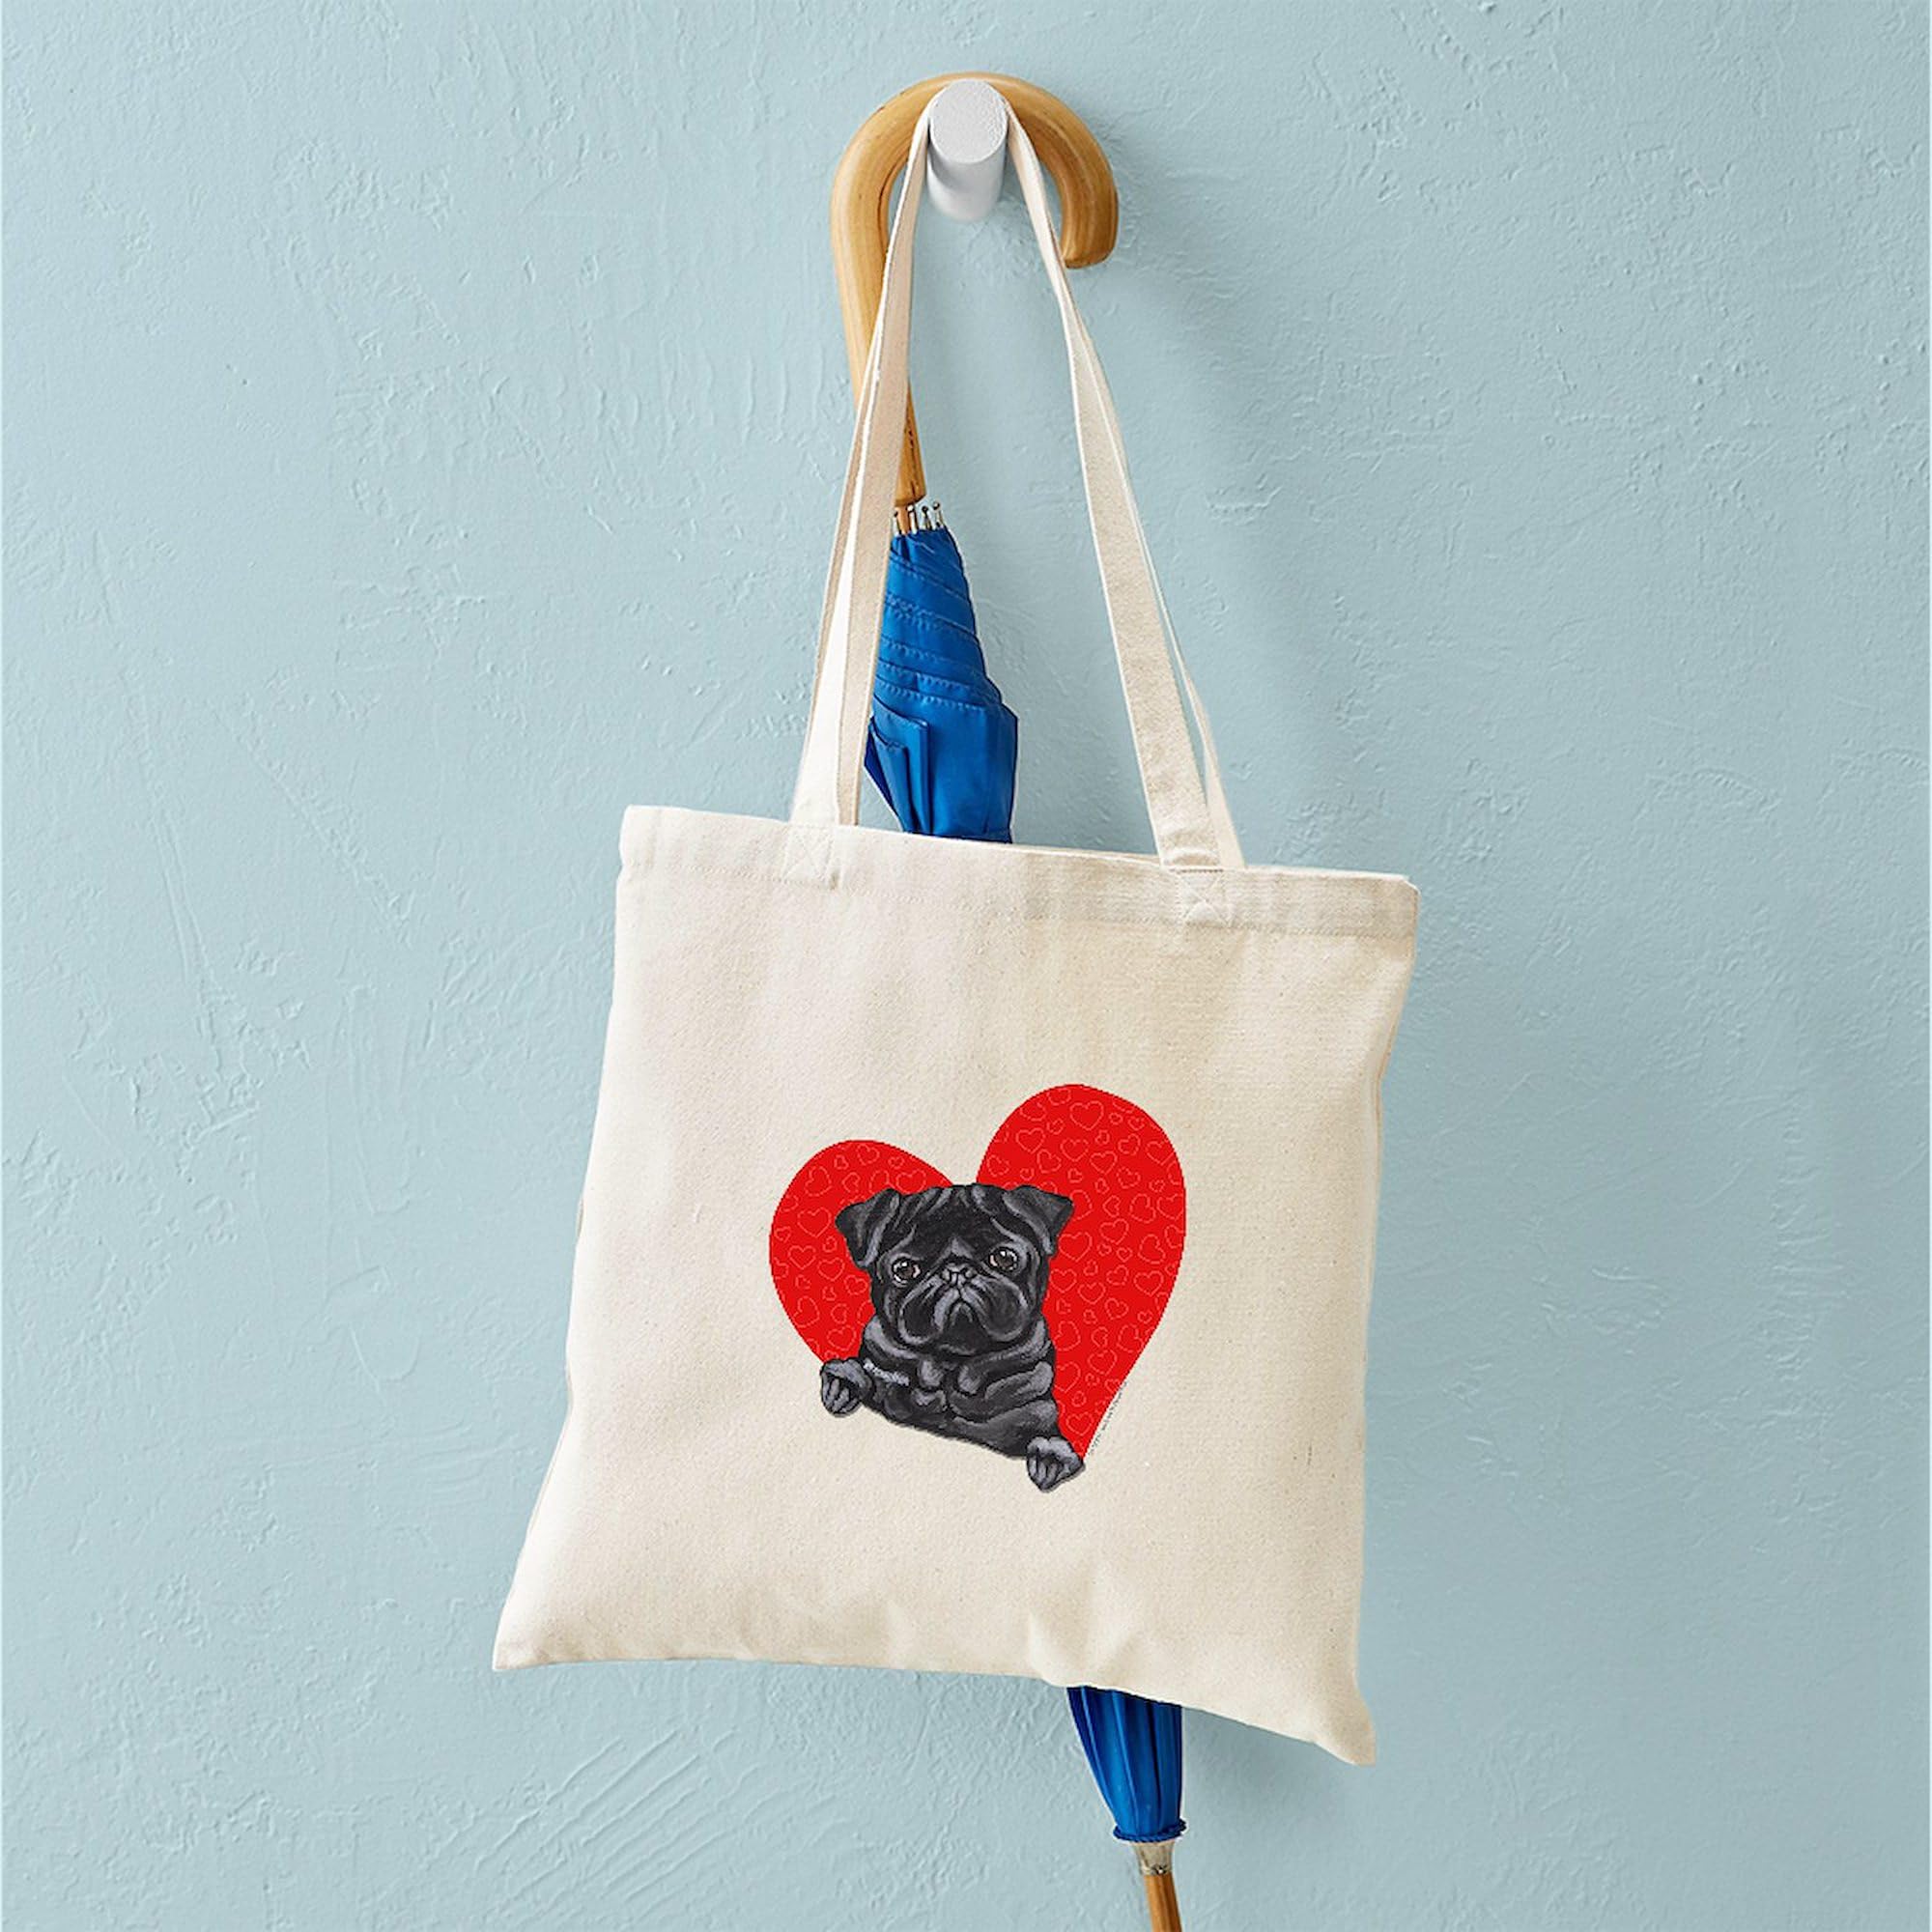 CafePress Black Pug Heart Tote Bag Canvas Tote Shopping Bag